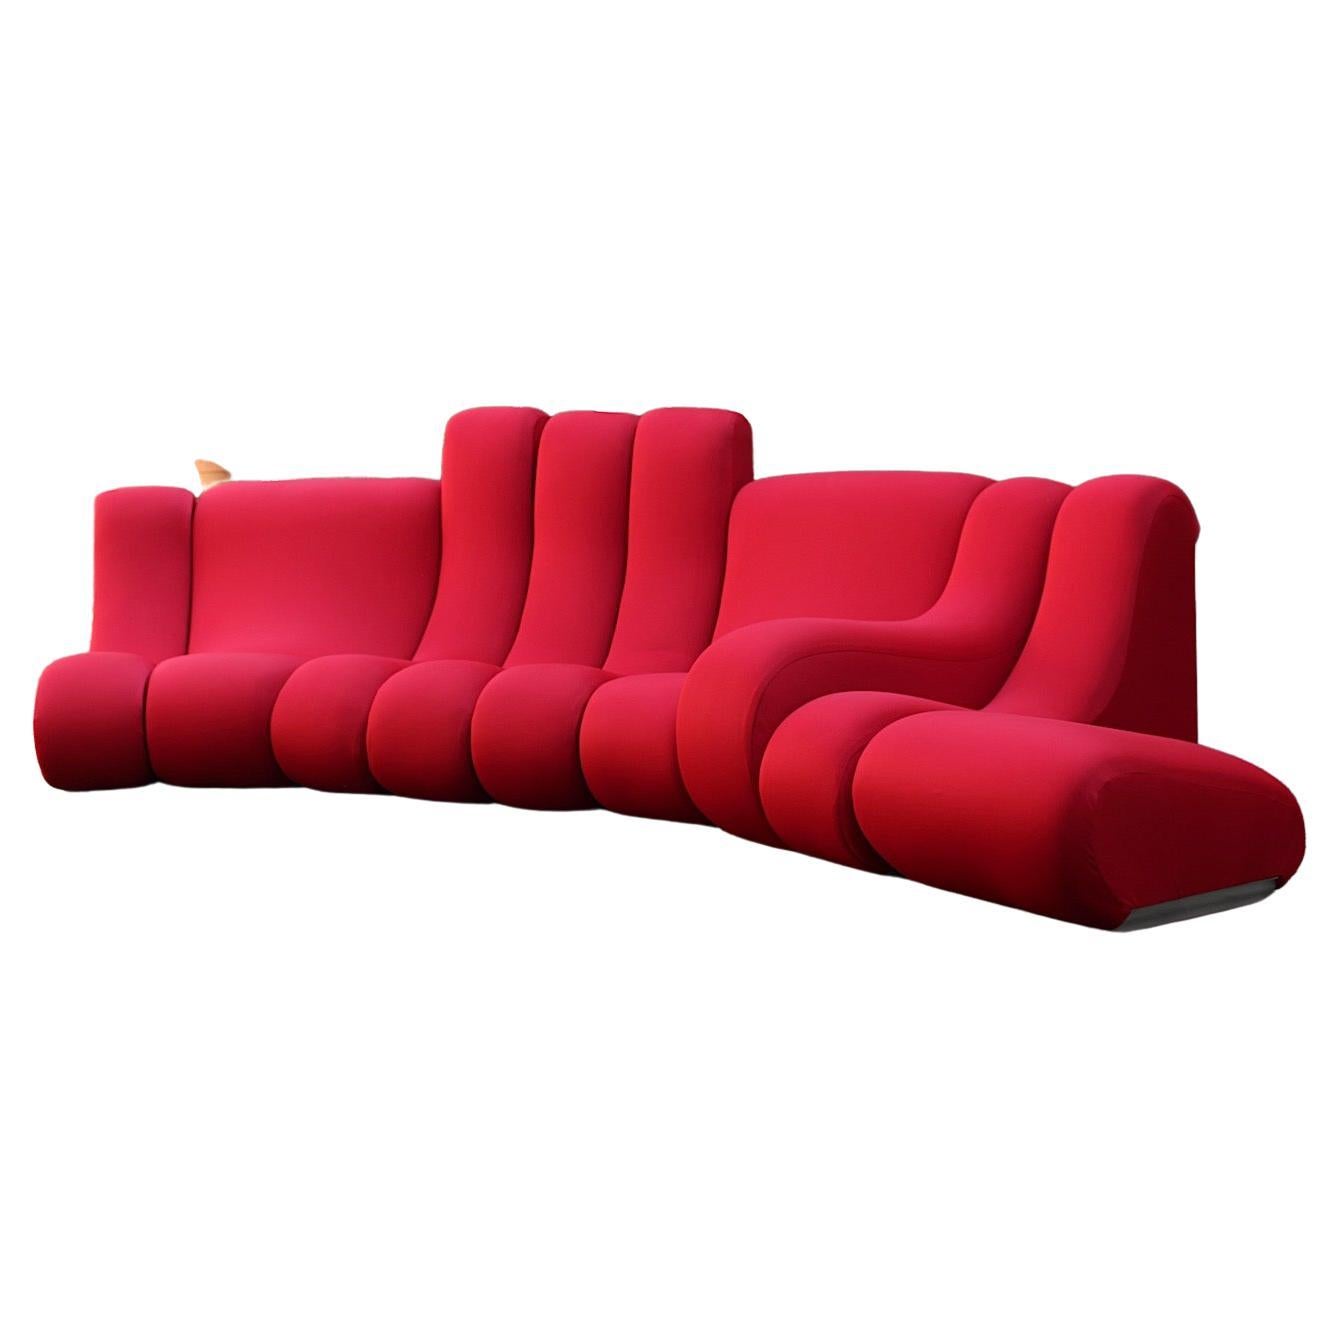 Space Age Vintage Red Sectional Freestanding Sofa Vario Pillo Burghardt Vogtherr